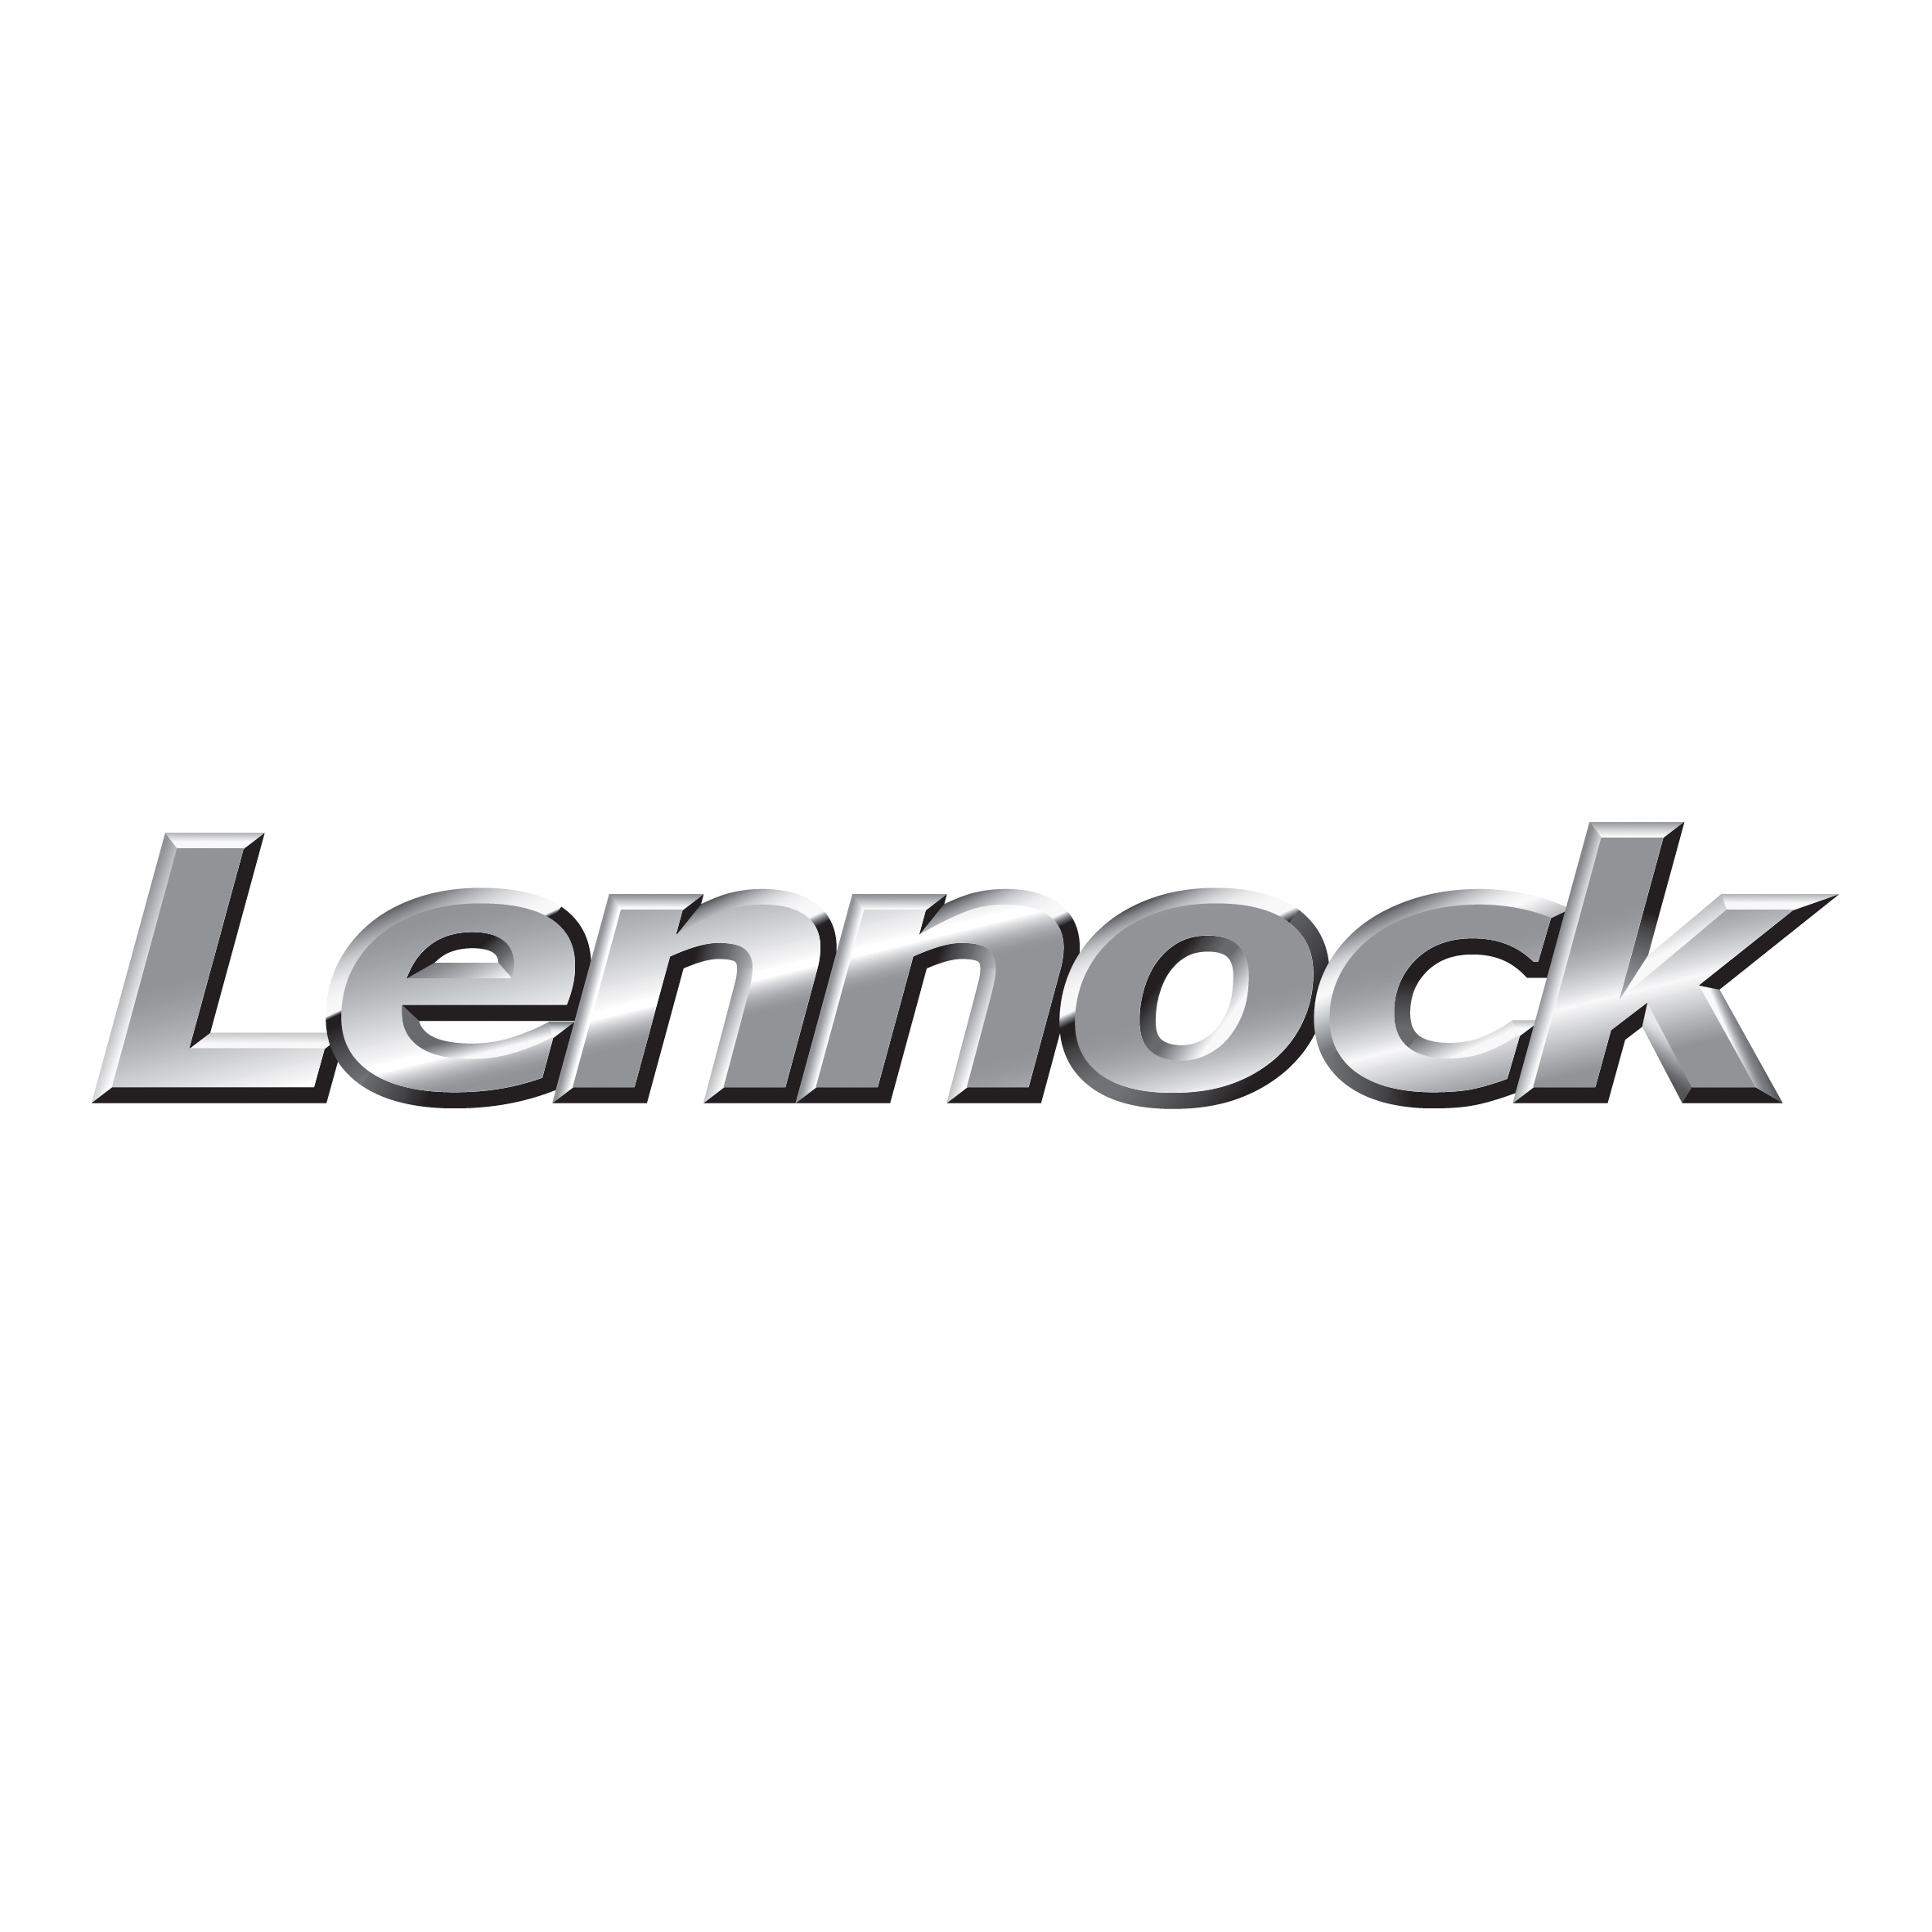 Lennock logo square